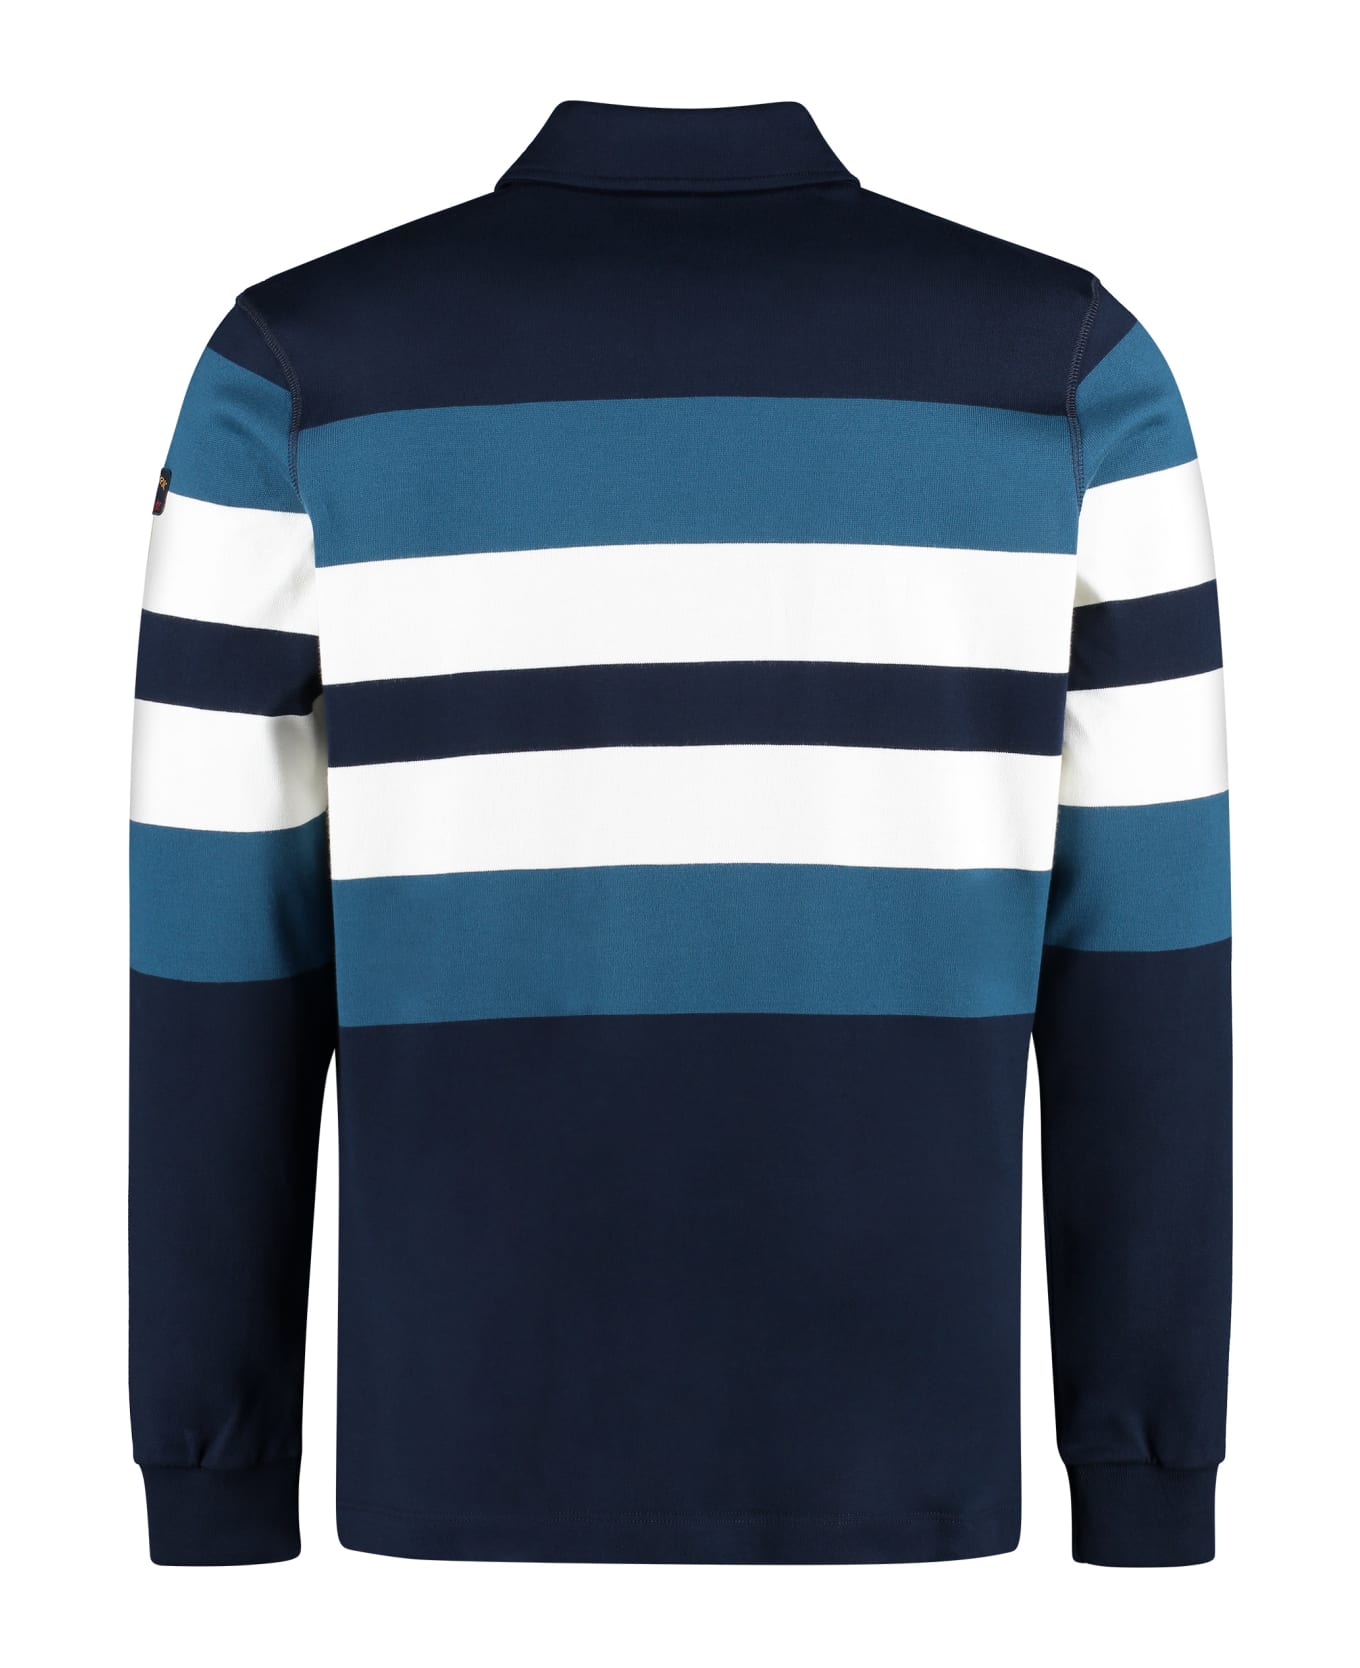 Paul&Shark Striped Cotton Polo Shirt - blue ポロシャツ